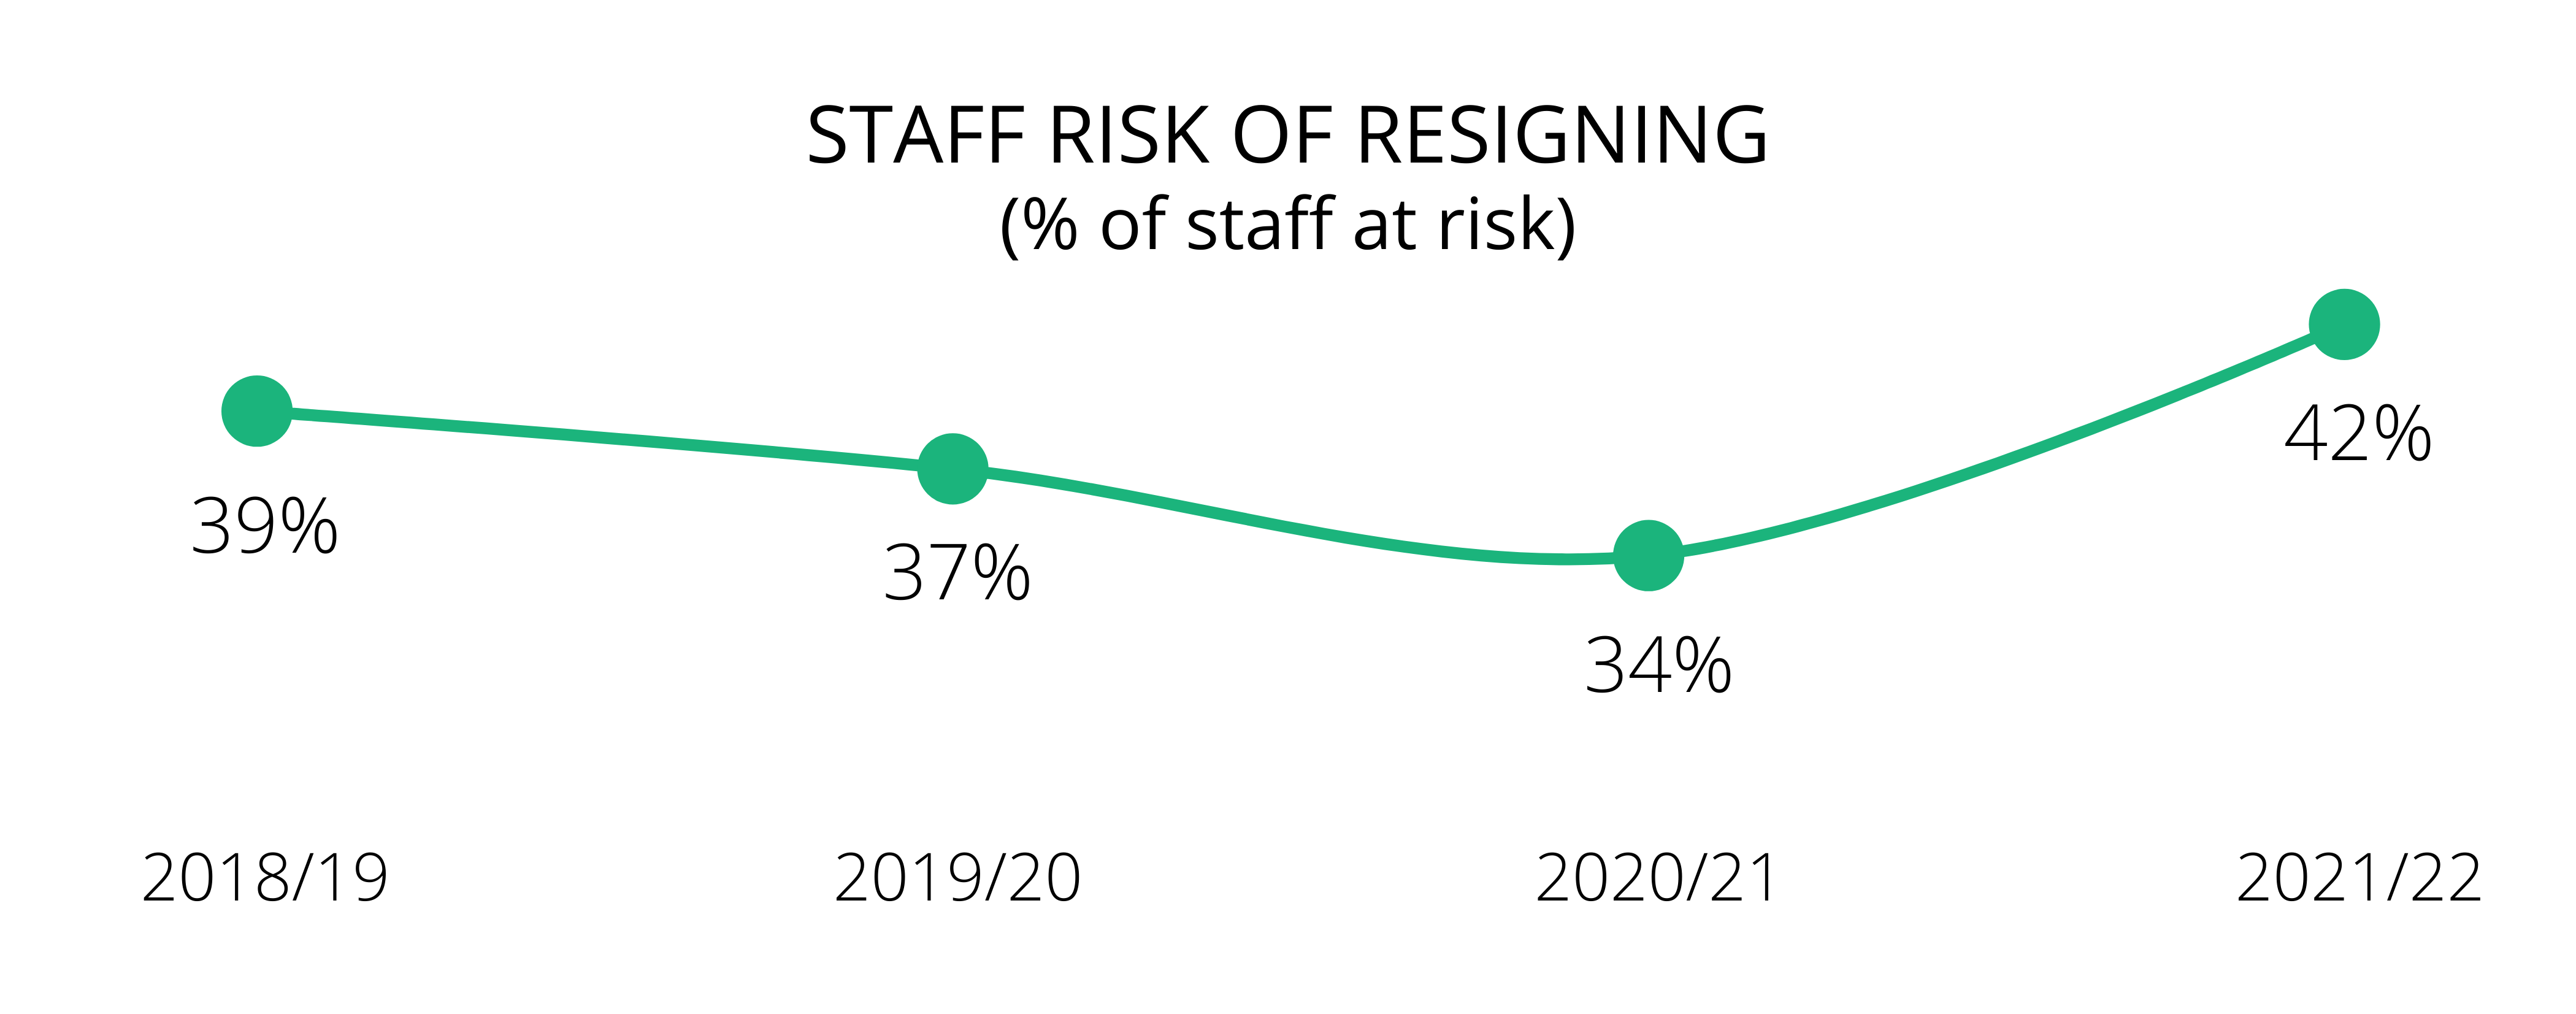 Staff-risk-of-resigning